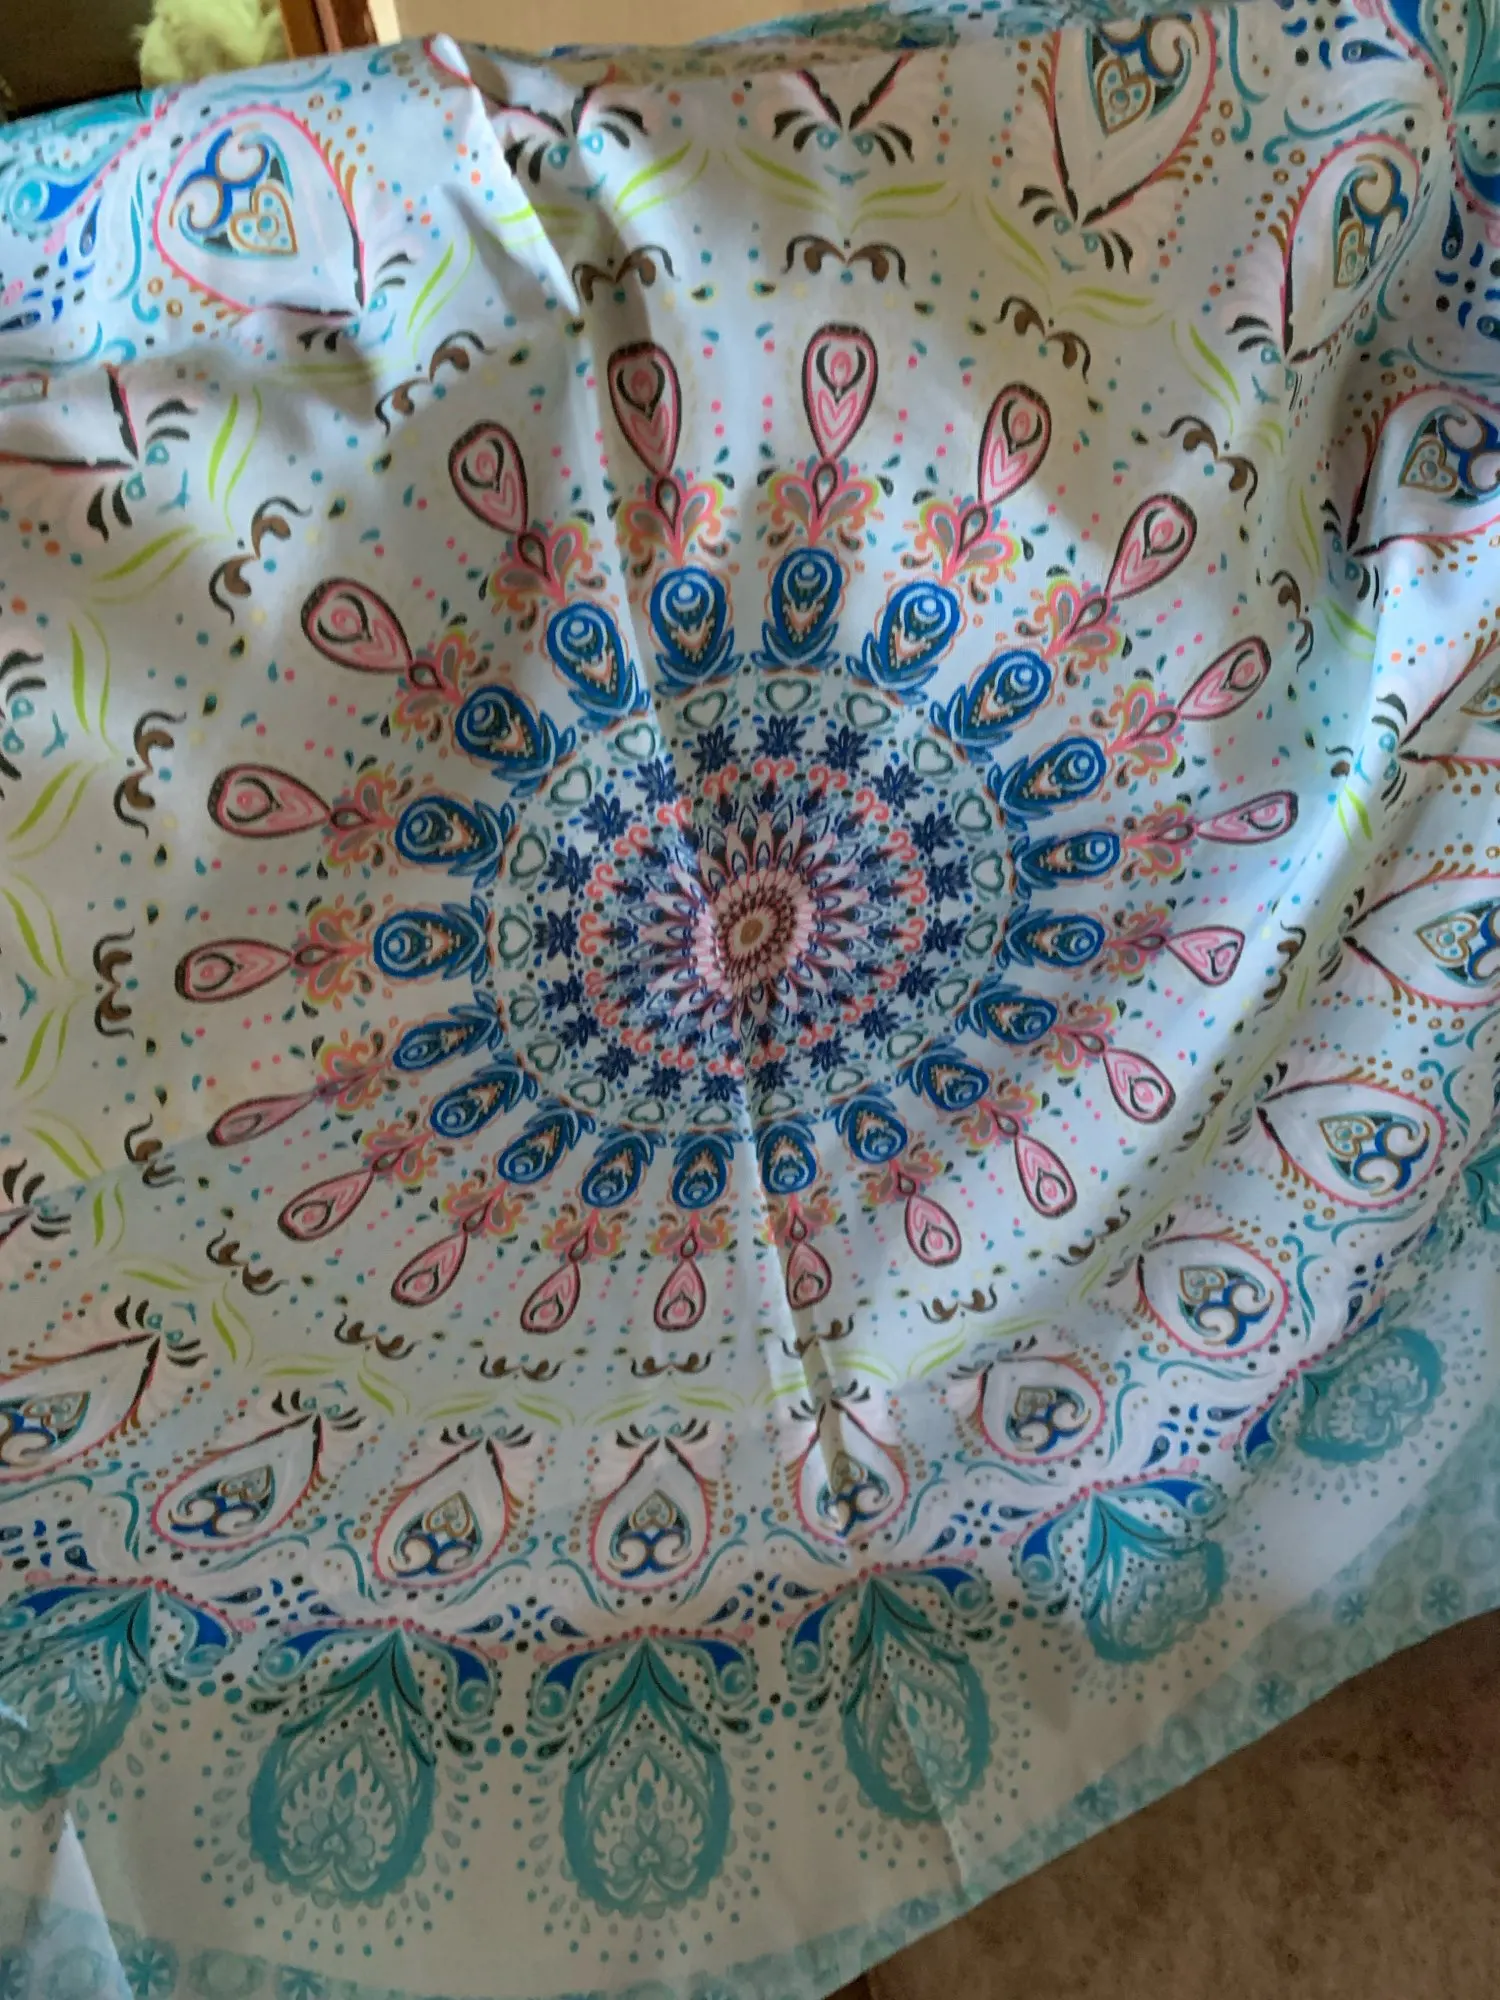 India Mandala Tapestry Wall Hanging Boho Decor Wall Cloth Tapestries Psychedelic Hippie Night Moon Tapestry Mandala Wall Carpet